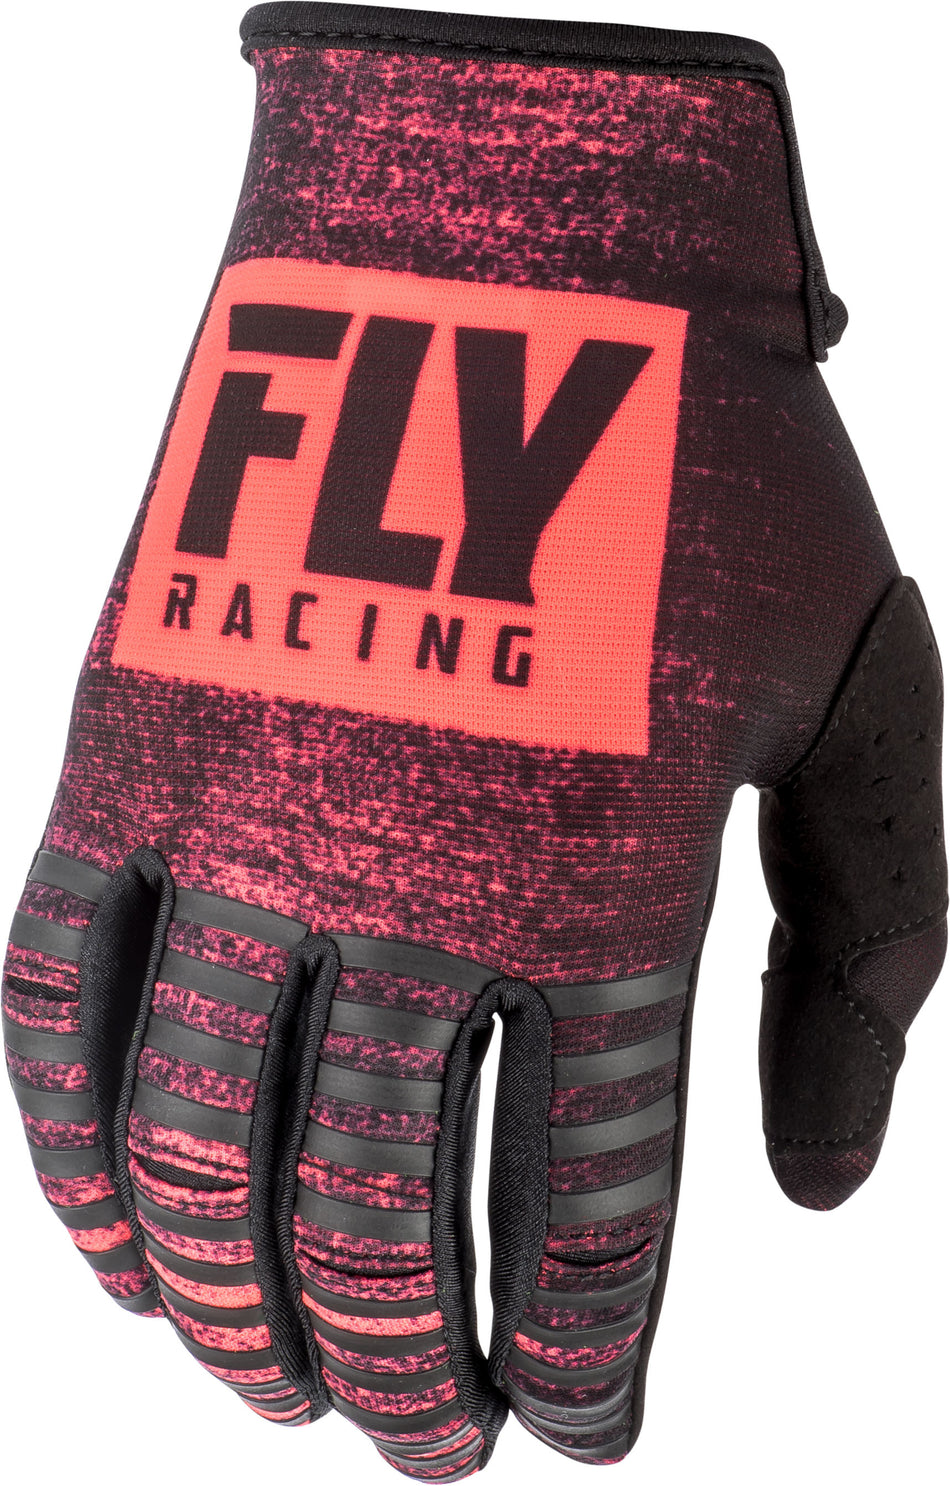 FLY RACING Kinetic Noiz Gloves Neon Red/Black Sz 09 372-51209